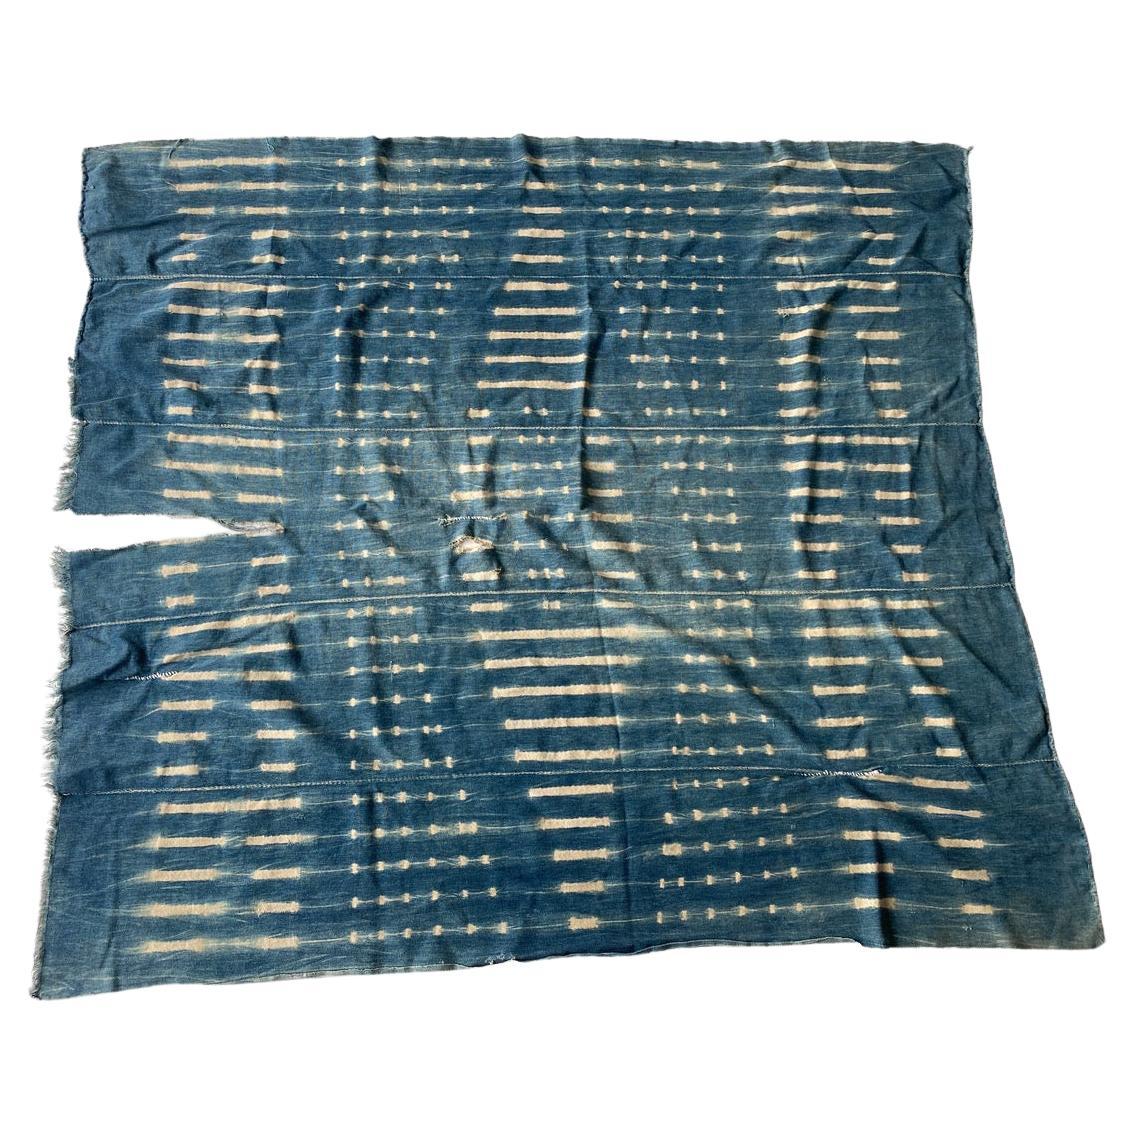 Andrianna Shamaris Antique Indigo Mali Textile